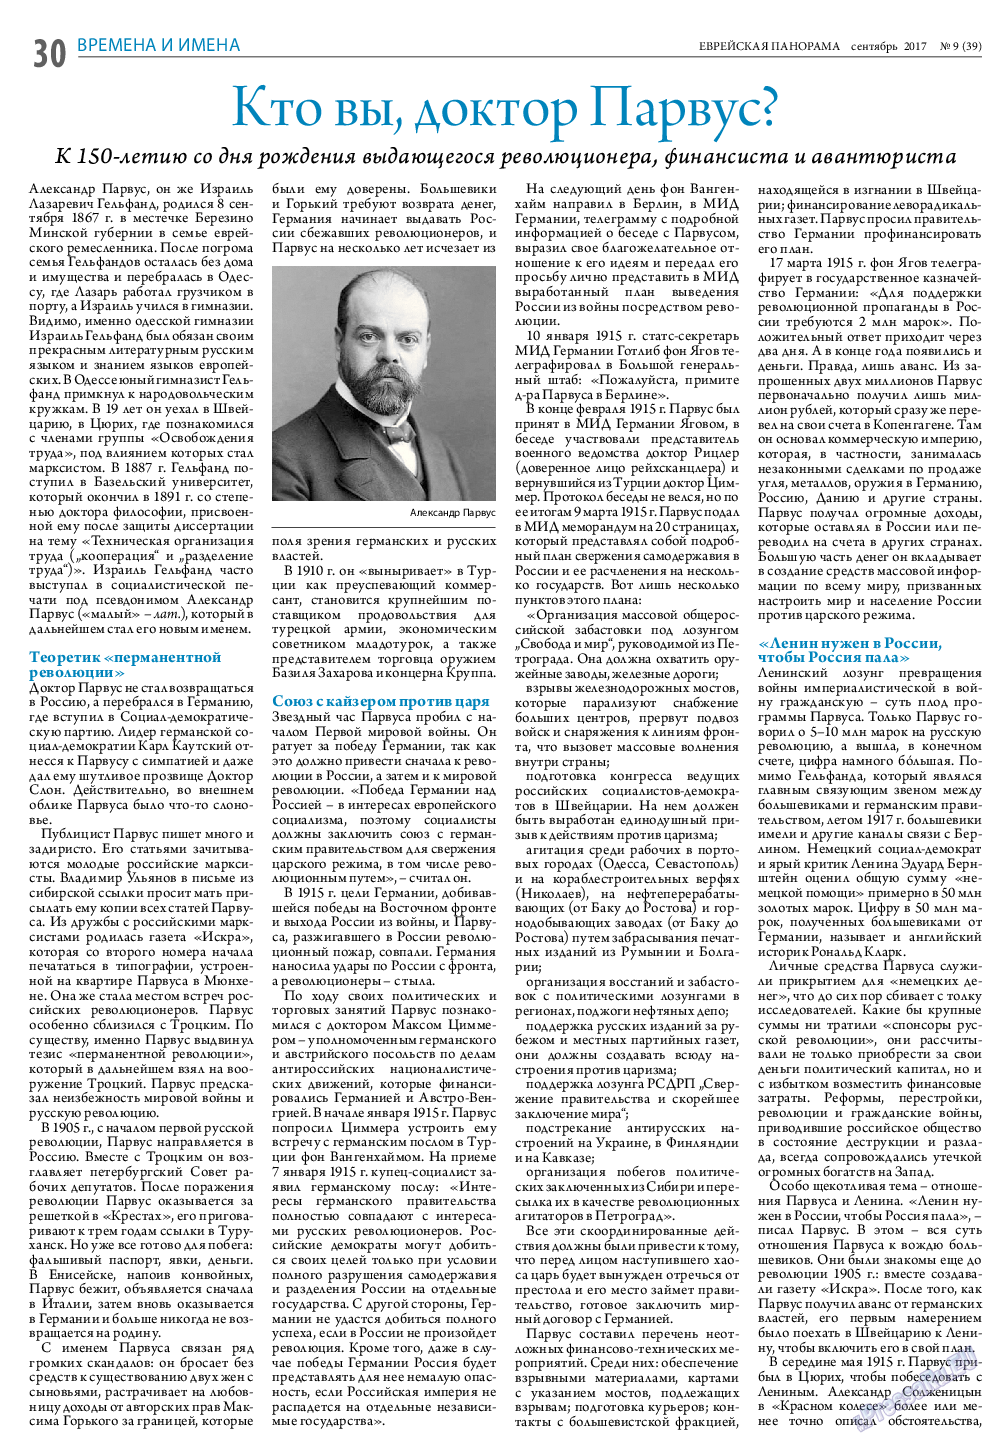 Еврейская панорама, газета. 2017 №9 стр.30